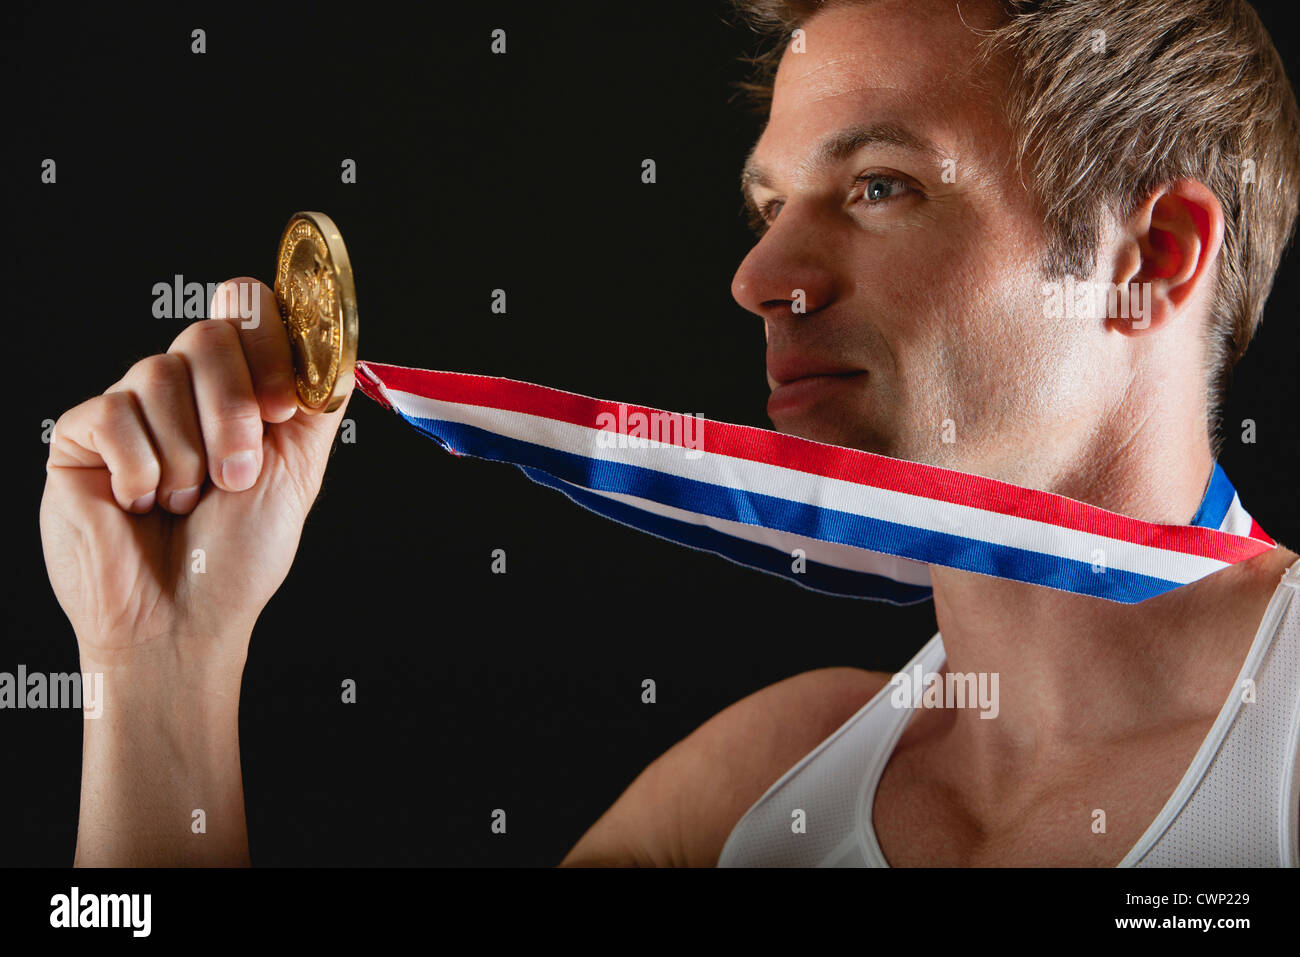 Athlete holding gold medal Stock Photo